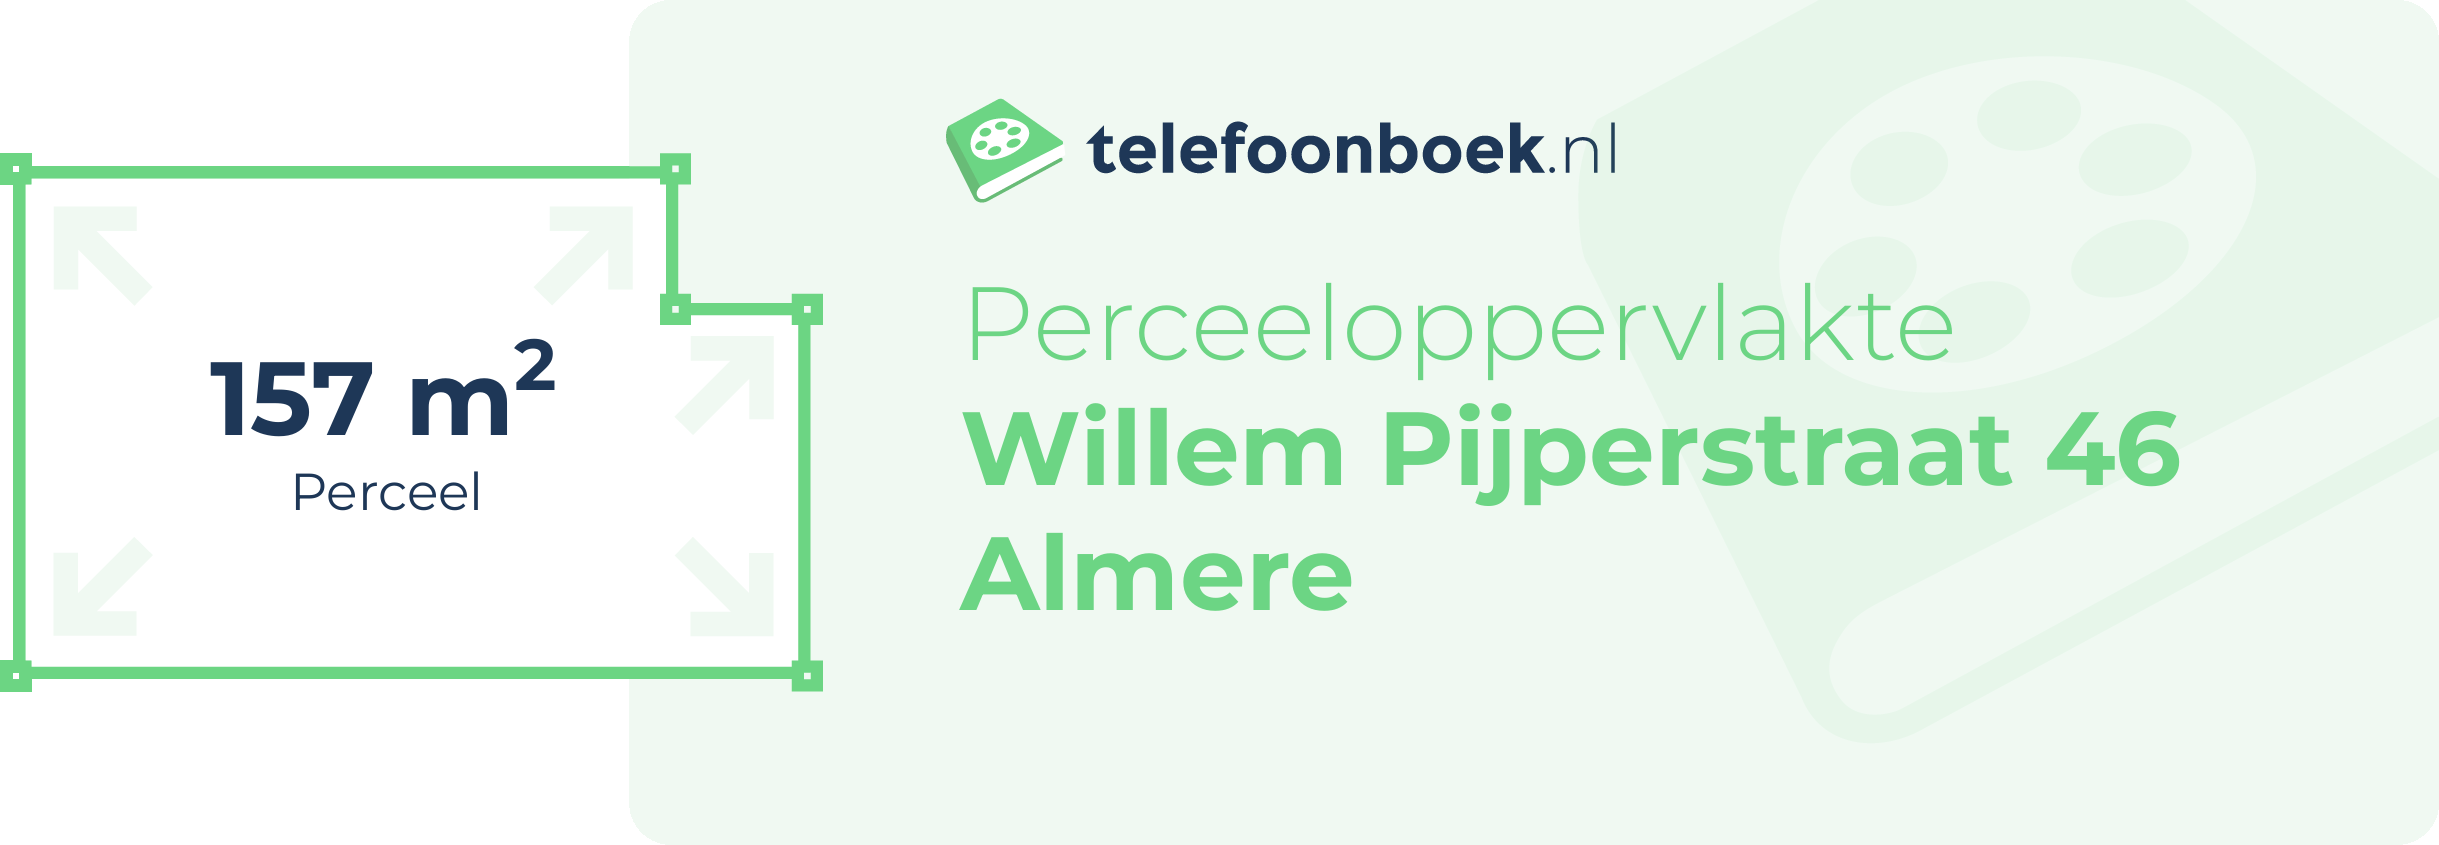 Perceeloppervlakte Willem Pijperstraat 46 Almere